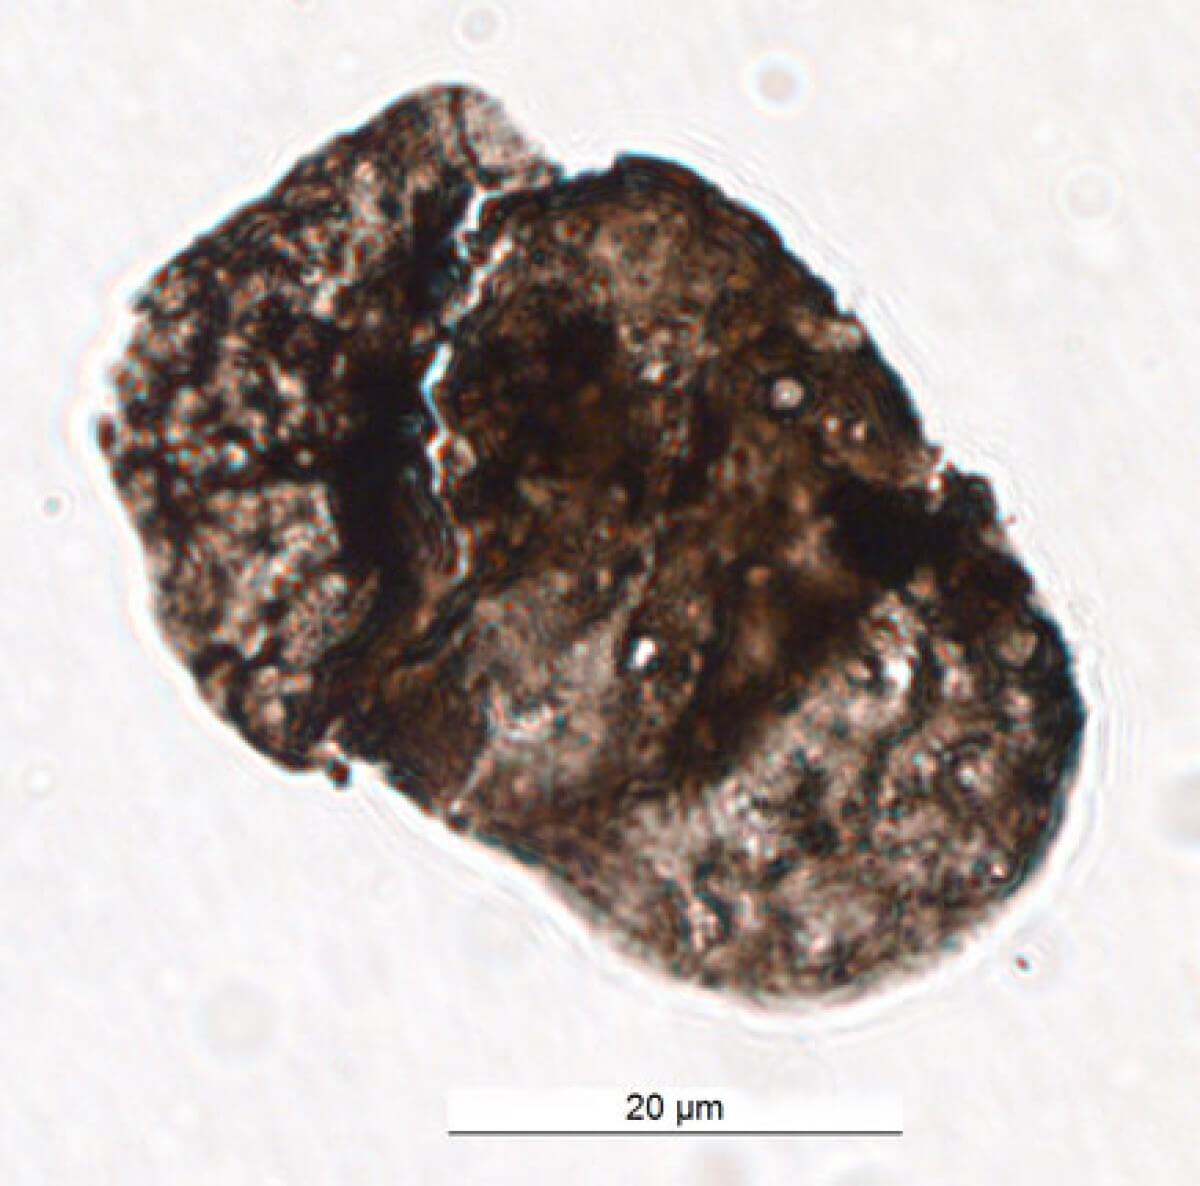 Microscopic image of an ancient pollen grain